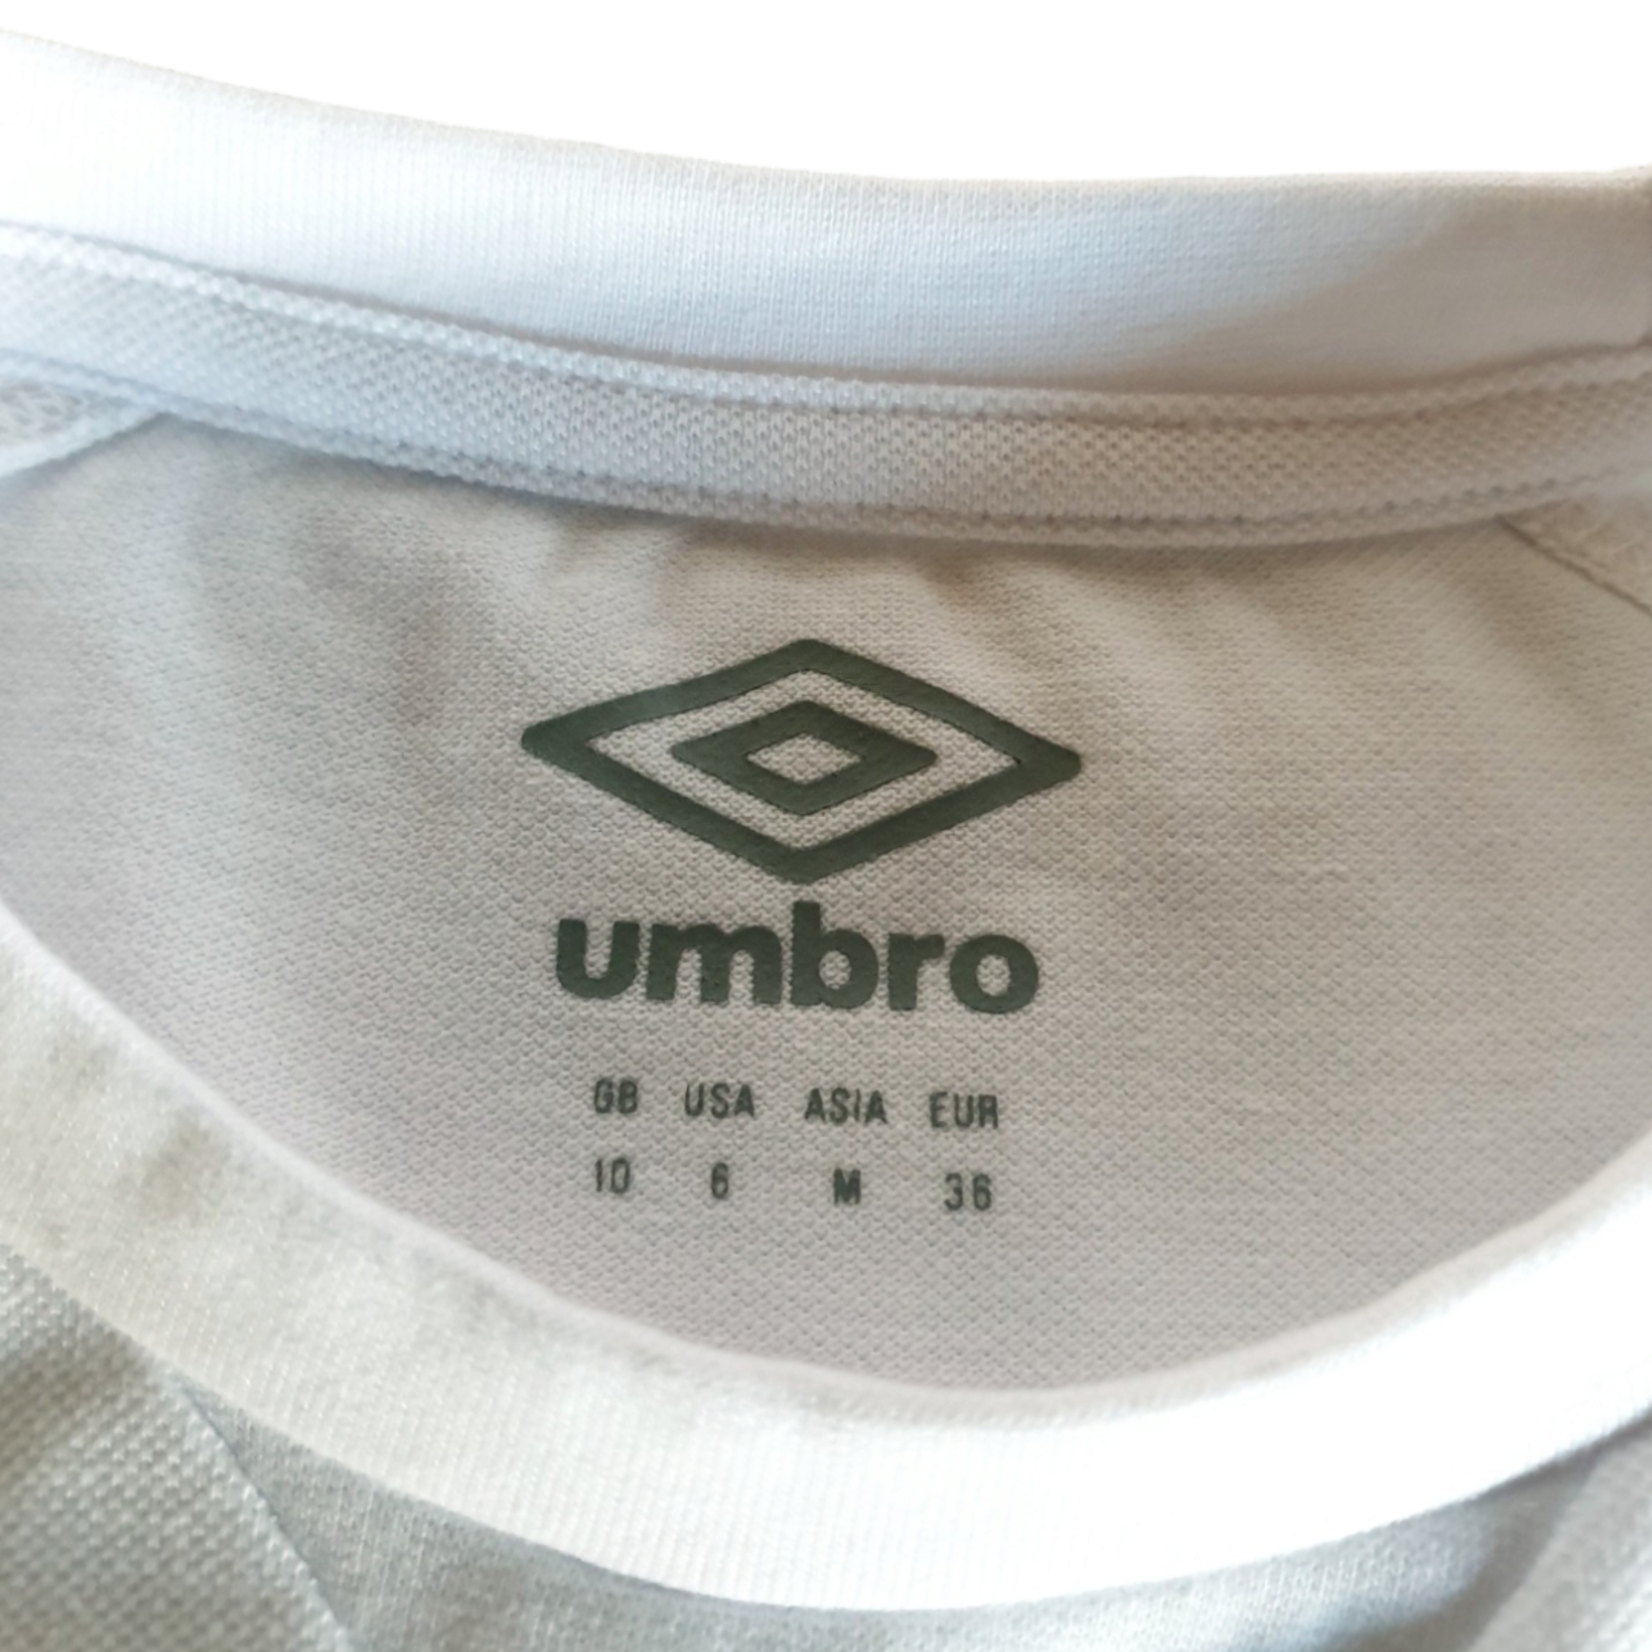 Umbro Origineel Umbro vintage rugby shirt Engeland